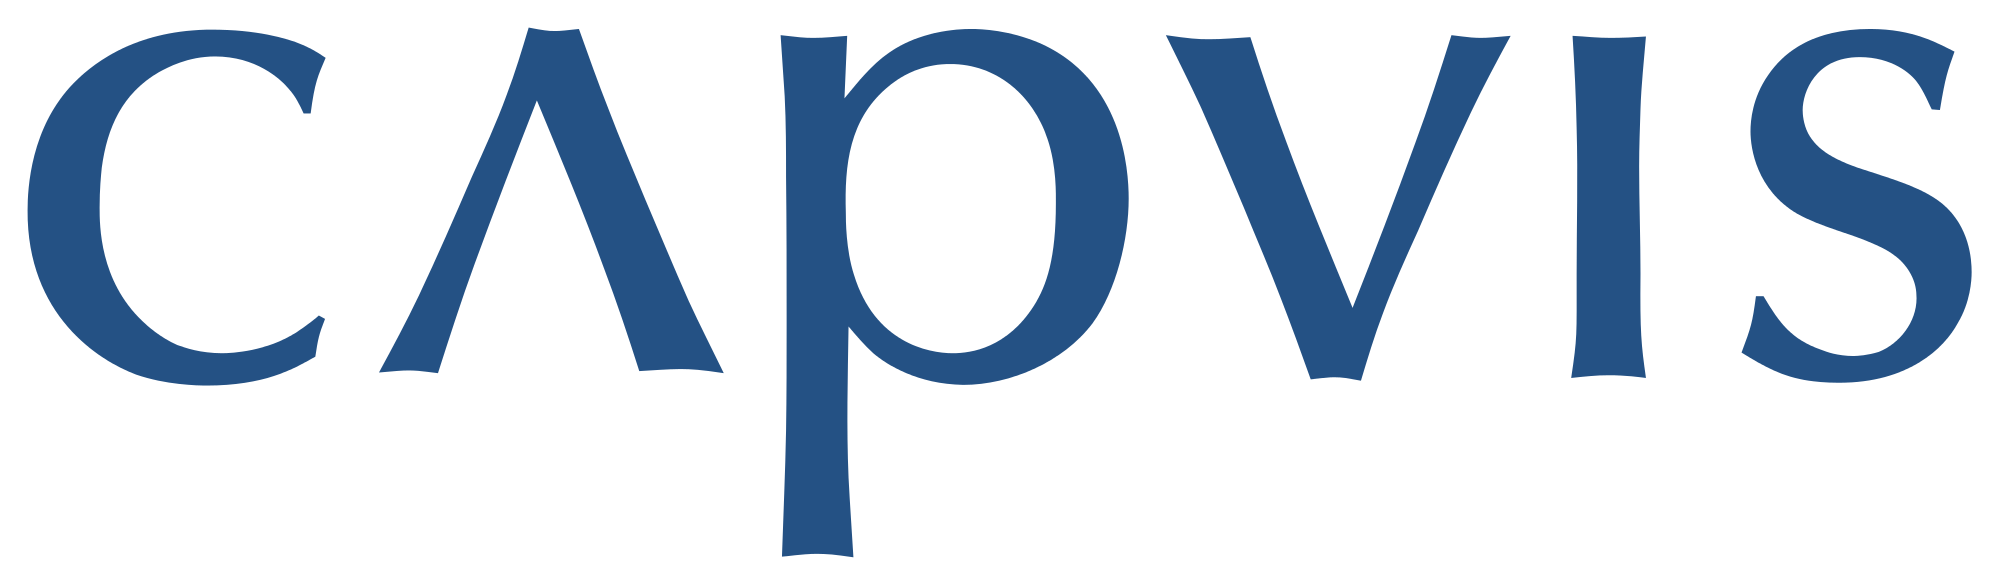 Capvis-Logo